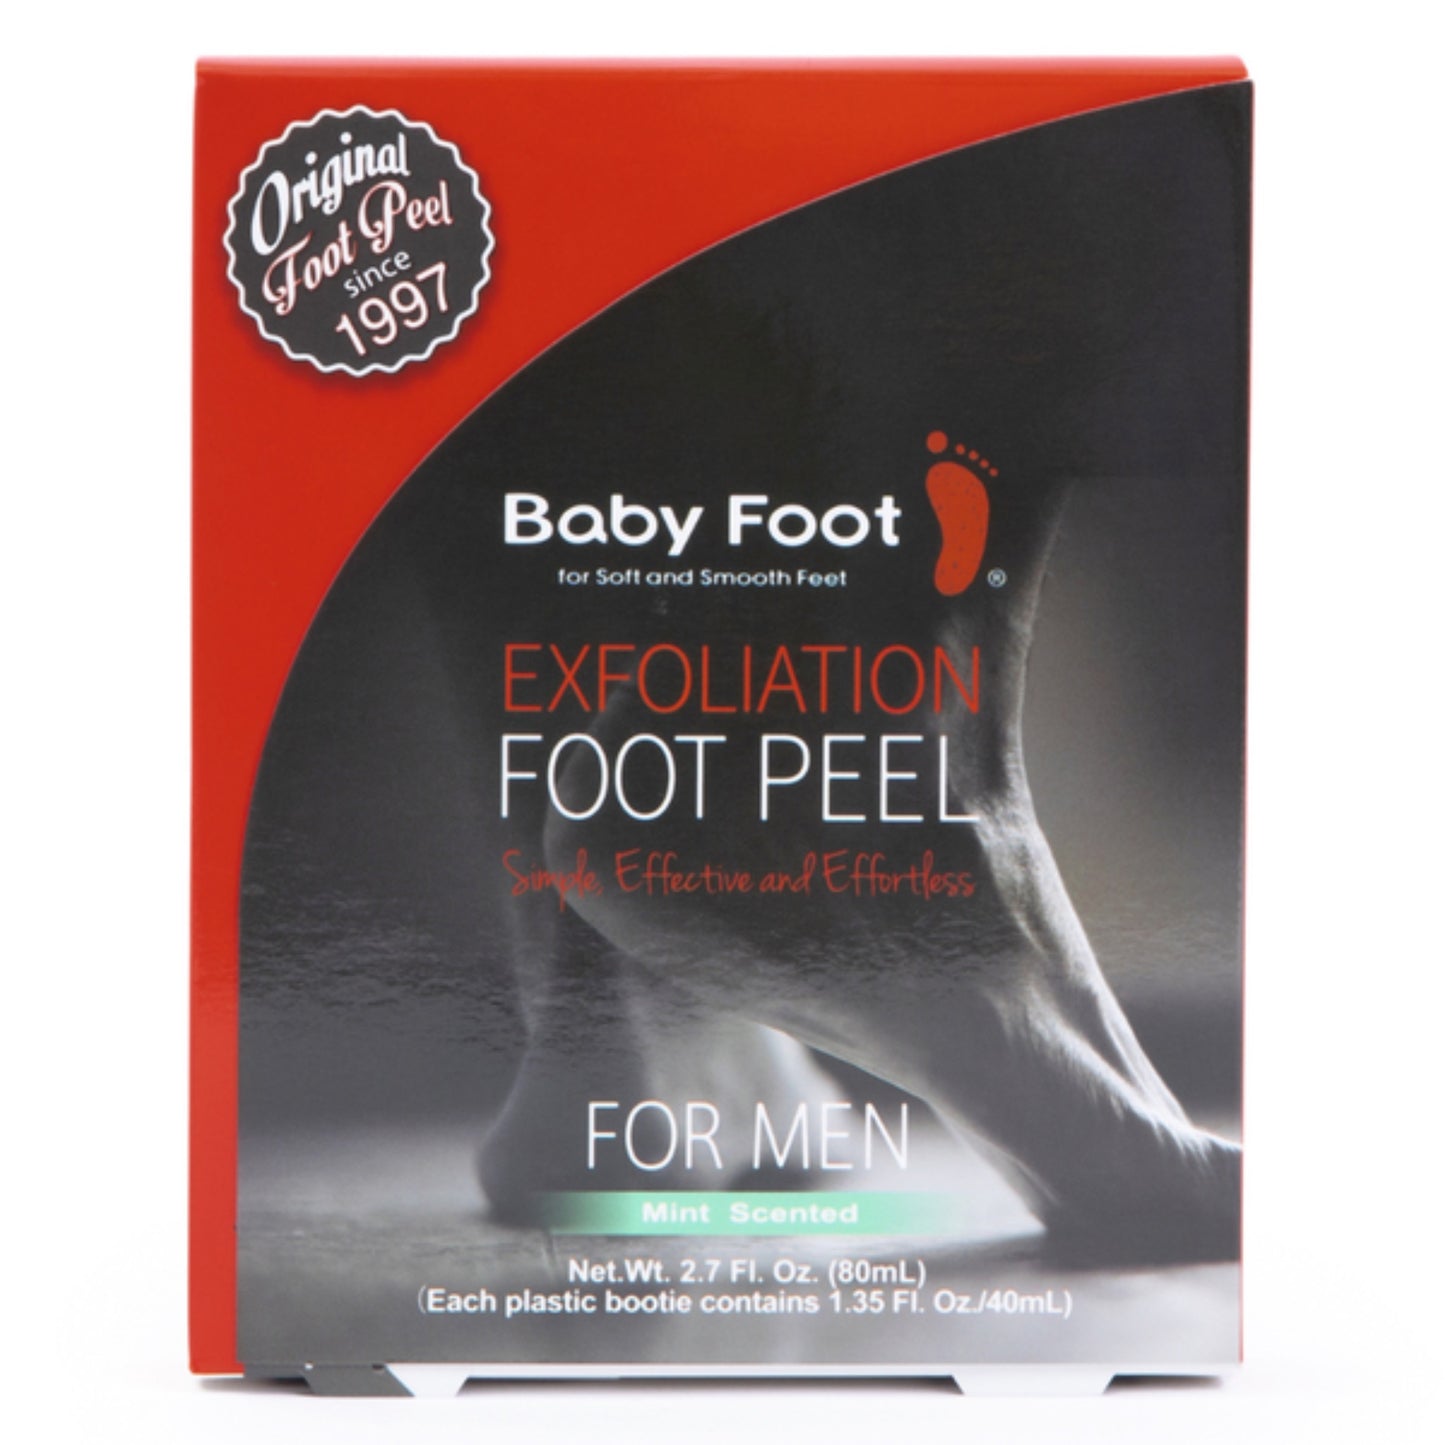 Baby Foot Exfoliating Foot Peel